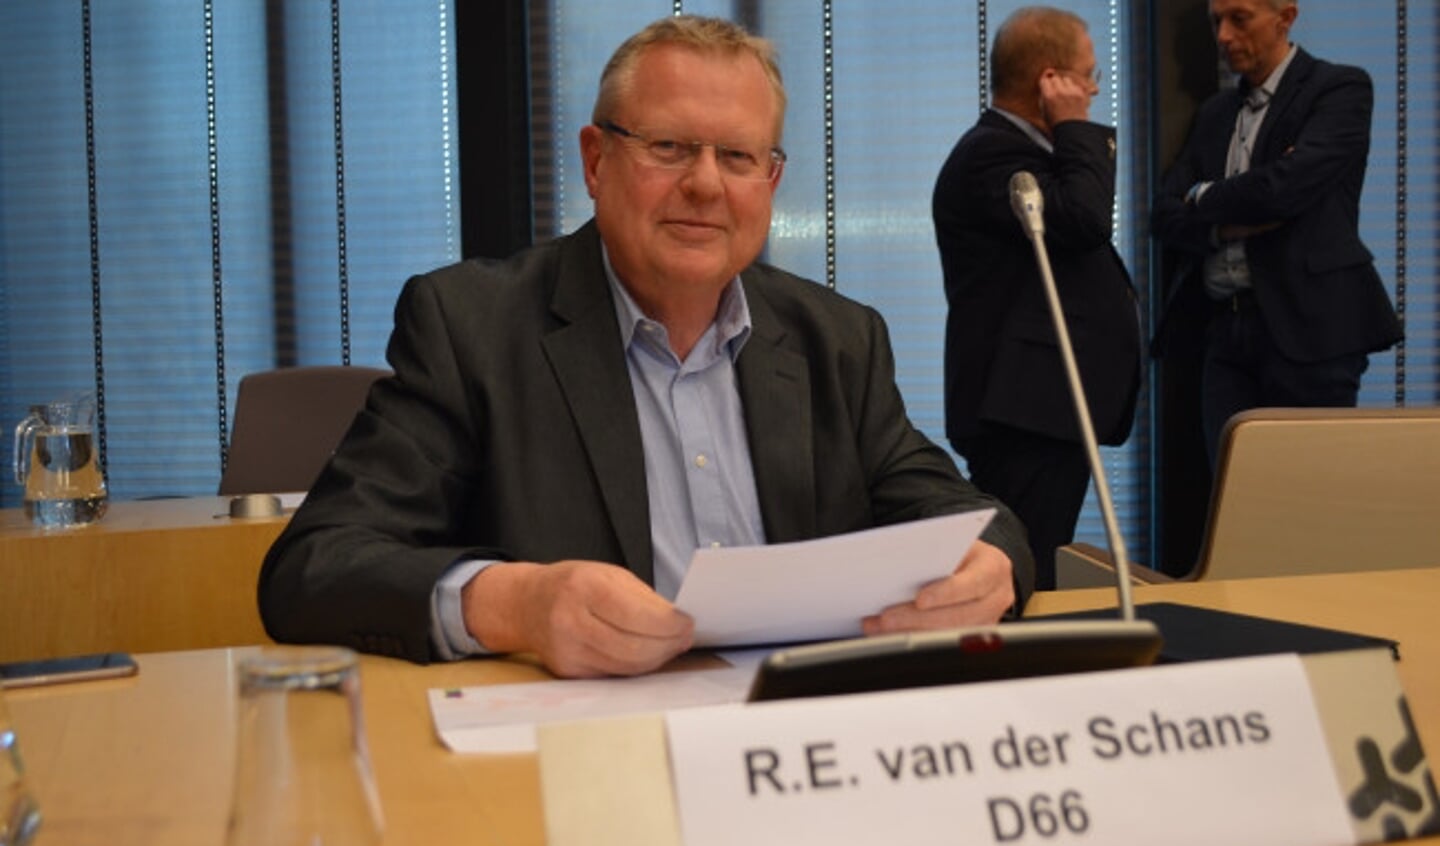  Rob van der Schans (D66)